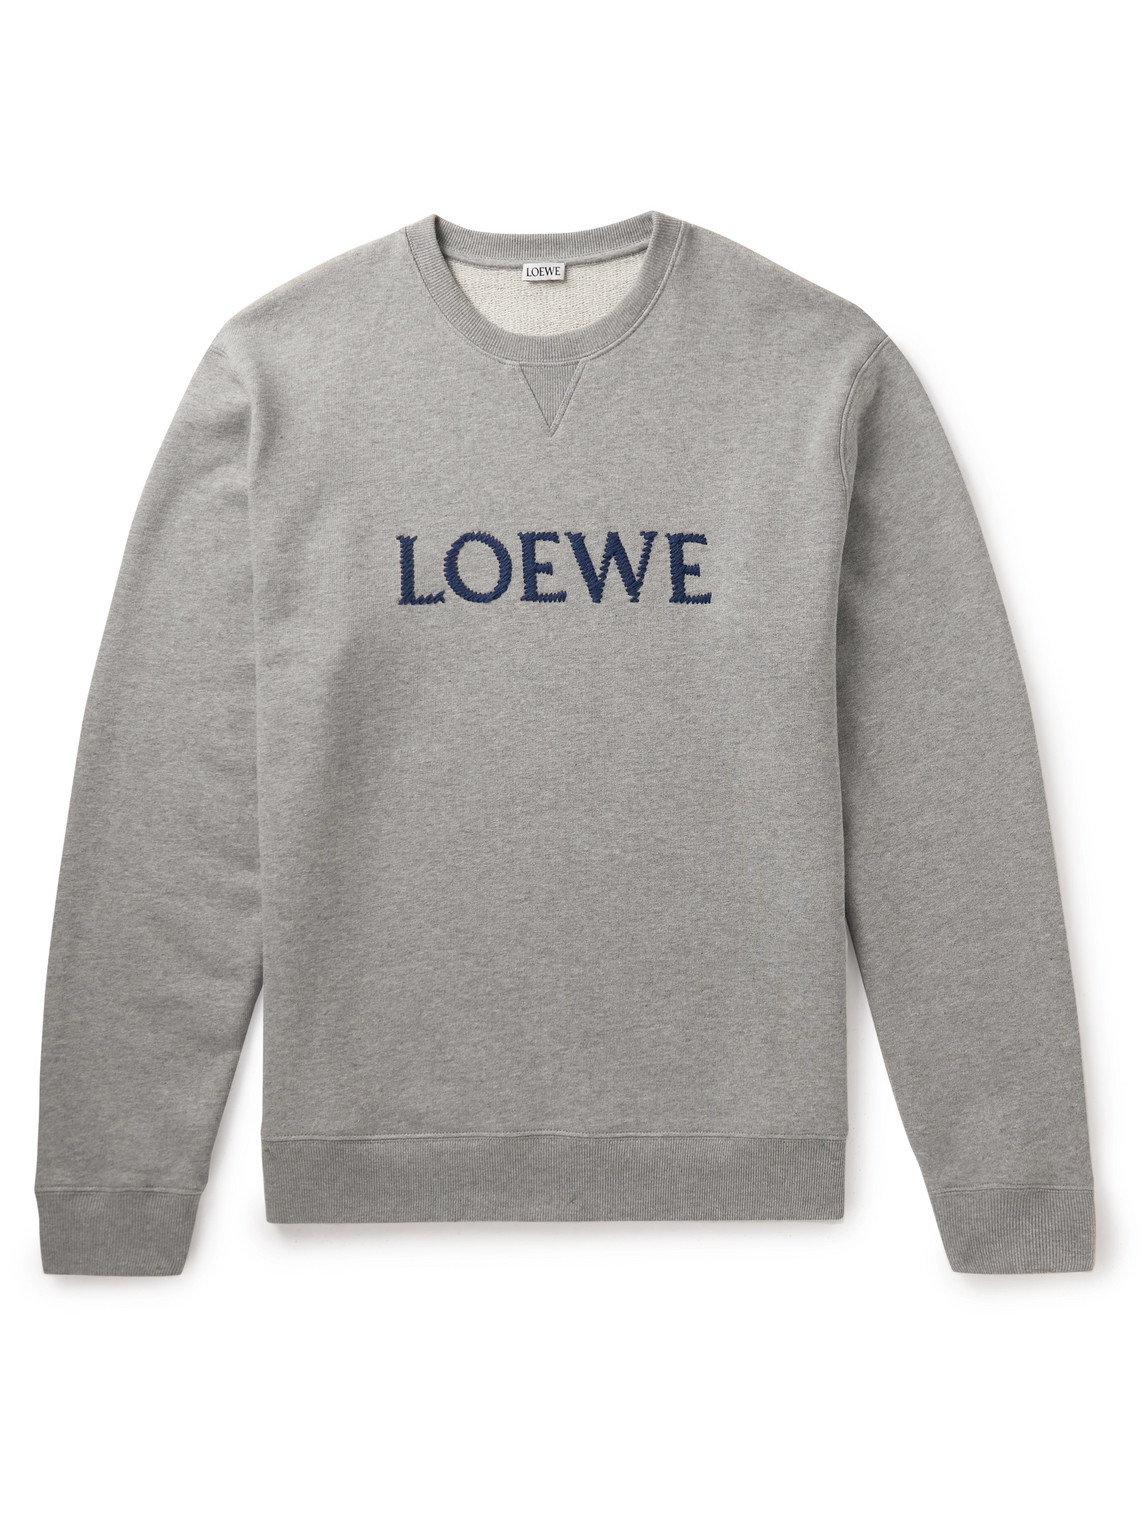 LOEWE - Logo-Embroidered Cotton-Jersey Sweatshirt - Men - Gray - M von LOEWE